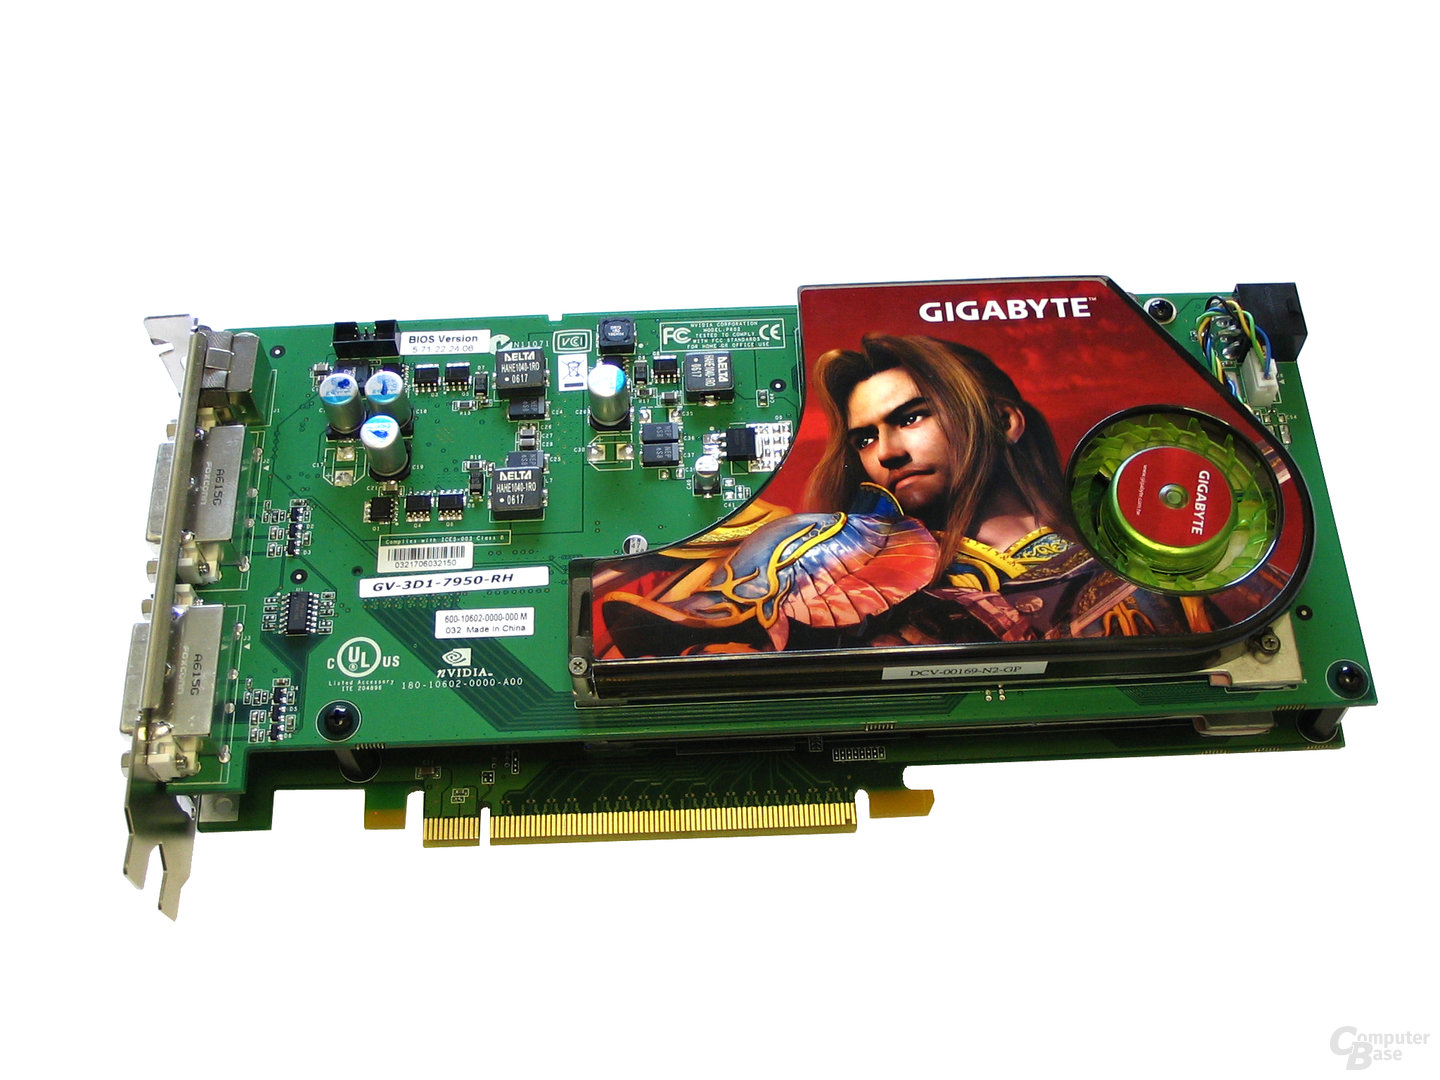 Gigabyte GeForce 7950 GX2